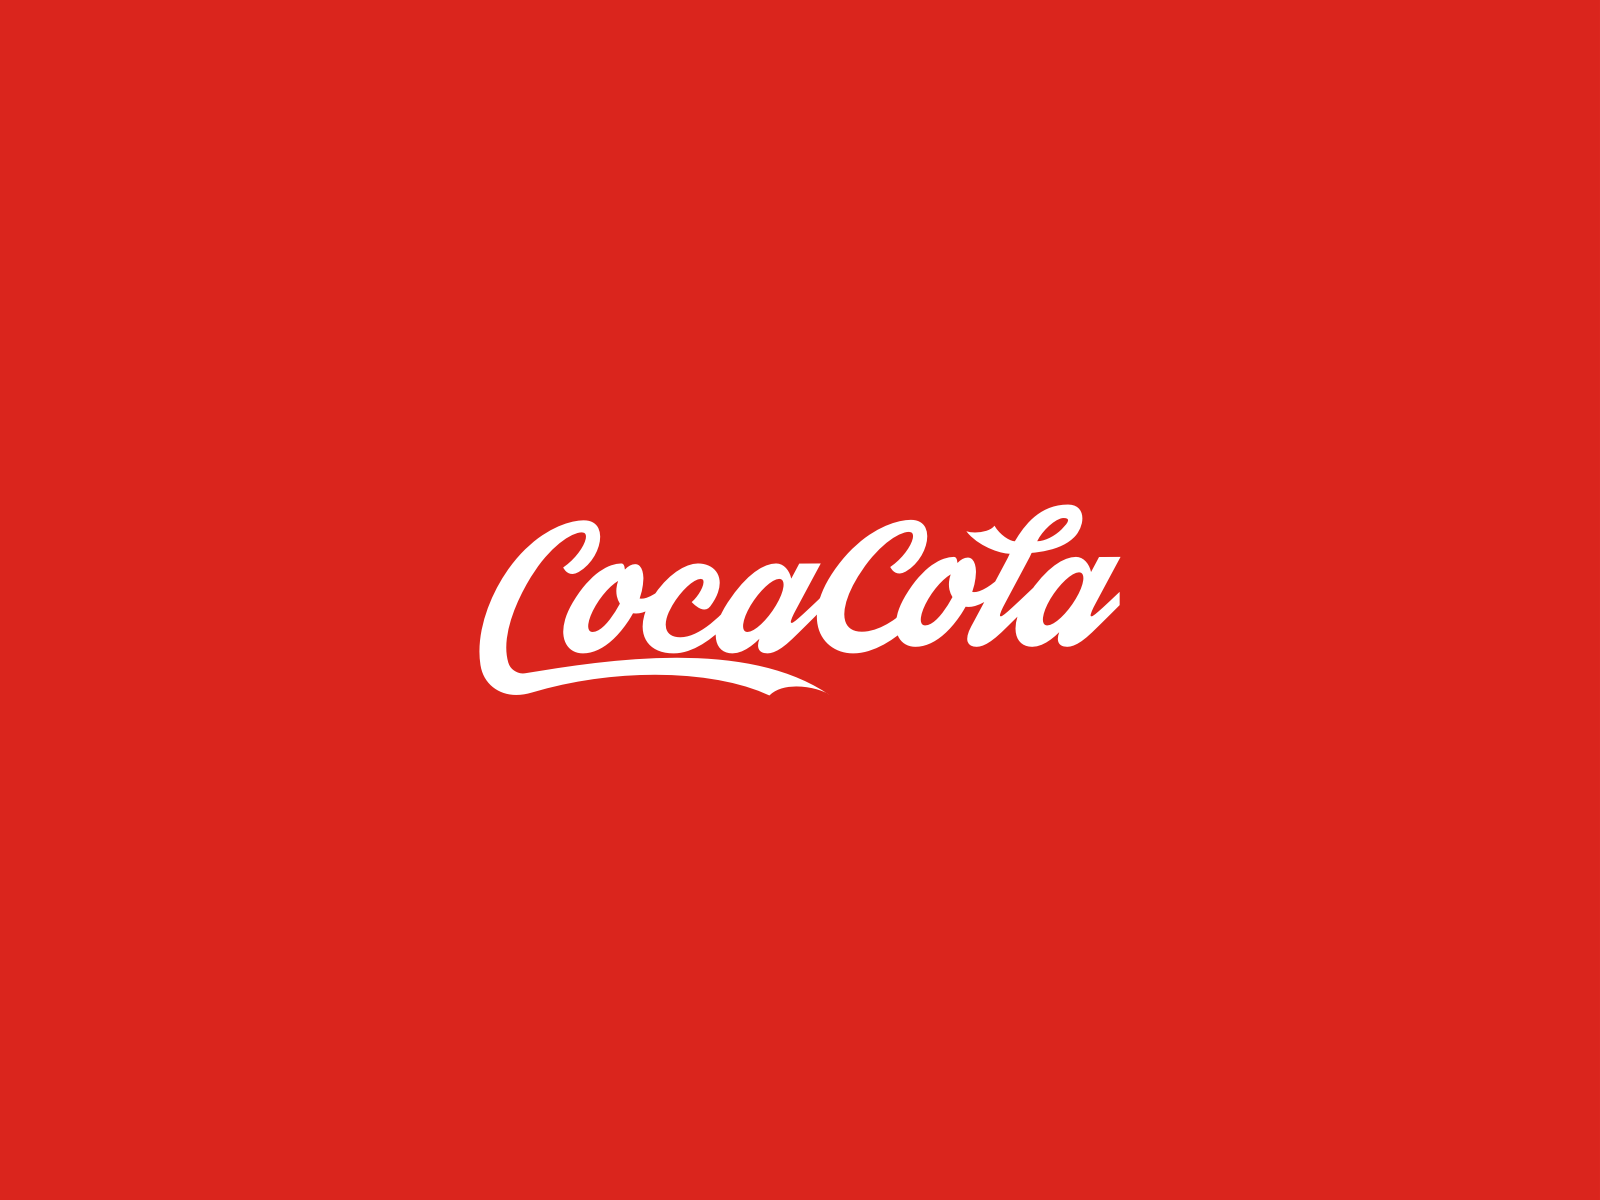 coca-cola logo redesign by Michał Pieczyński on Dribbble